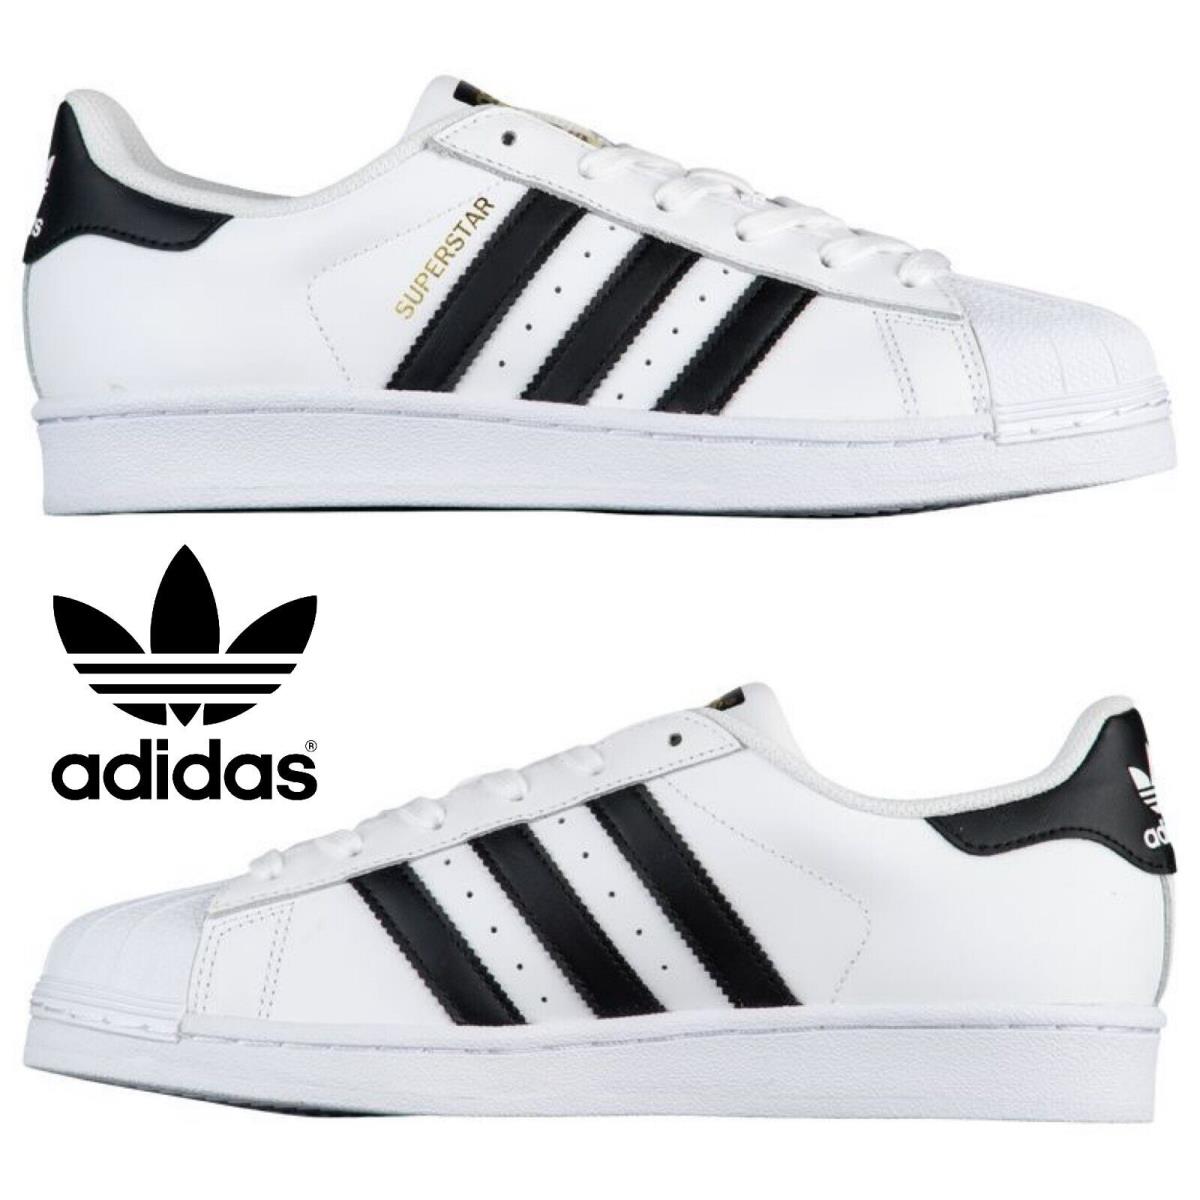 Adidas Originals Superstar Women s Sneakers Casual Shoes Sport Gym White Black